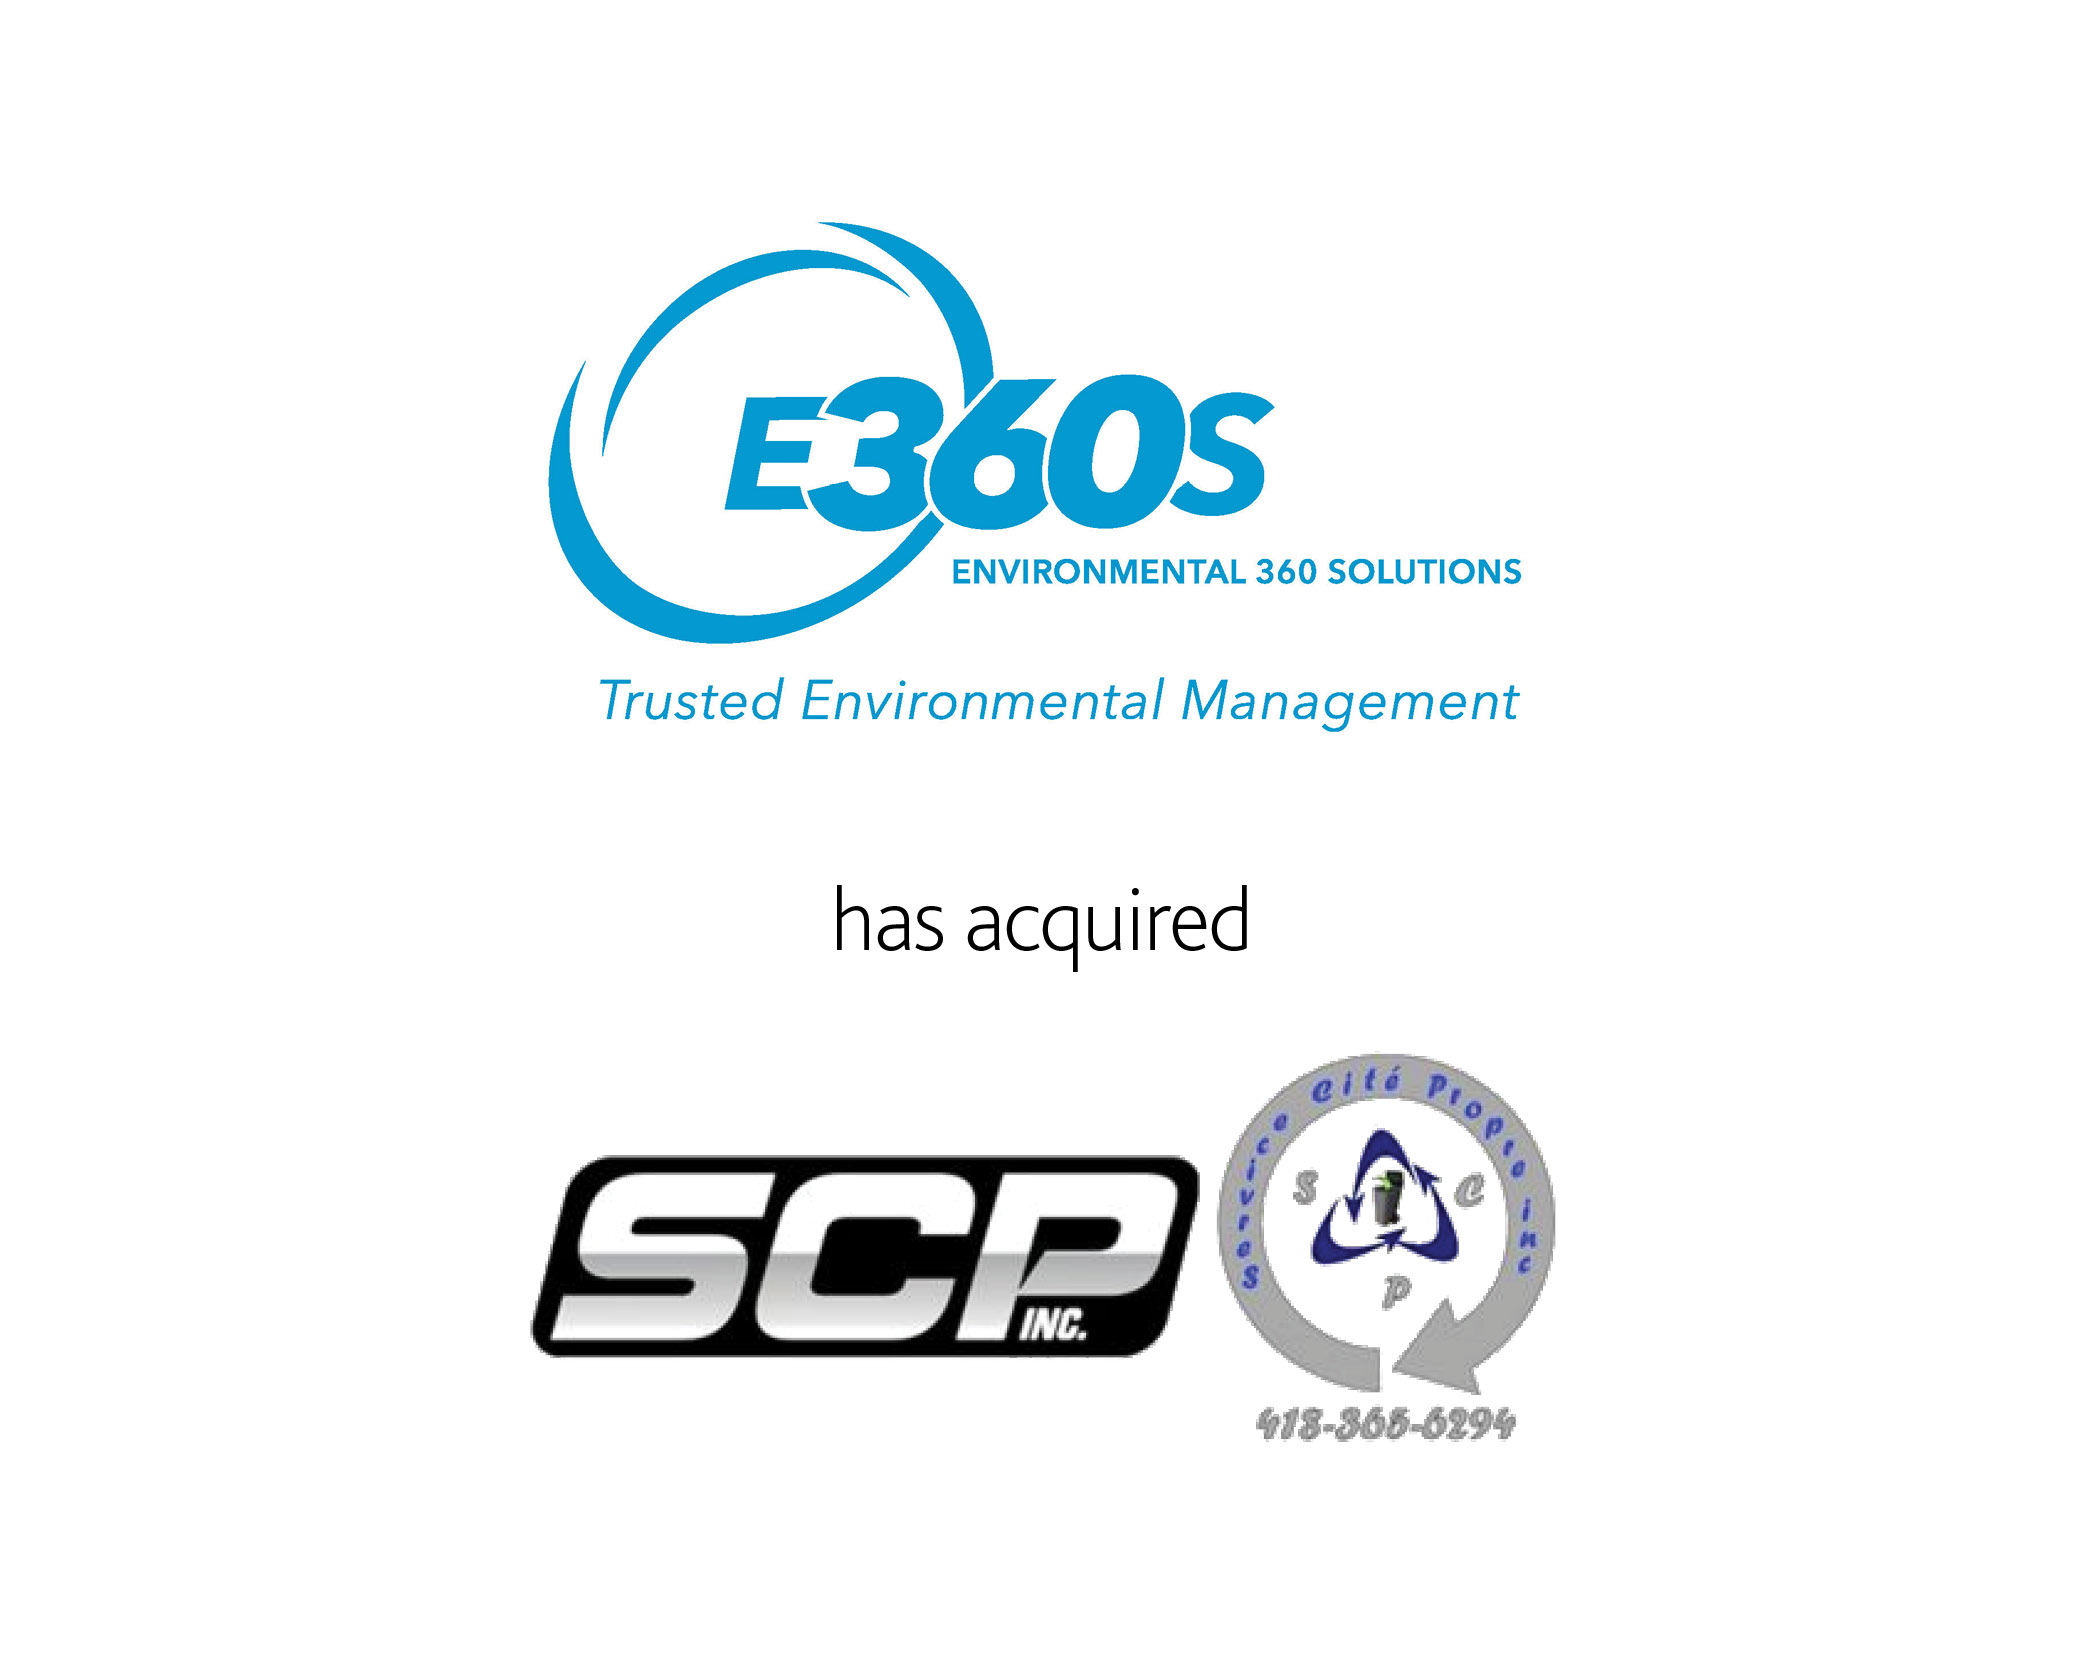 Environmental 360 Solutions Lt SCP Inc and Service Cité Propre Inc